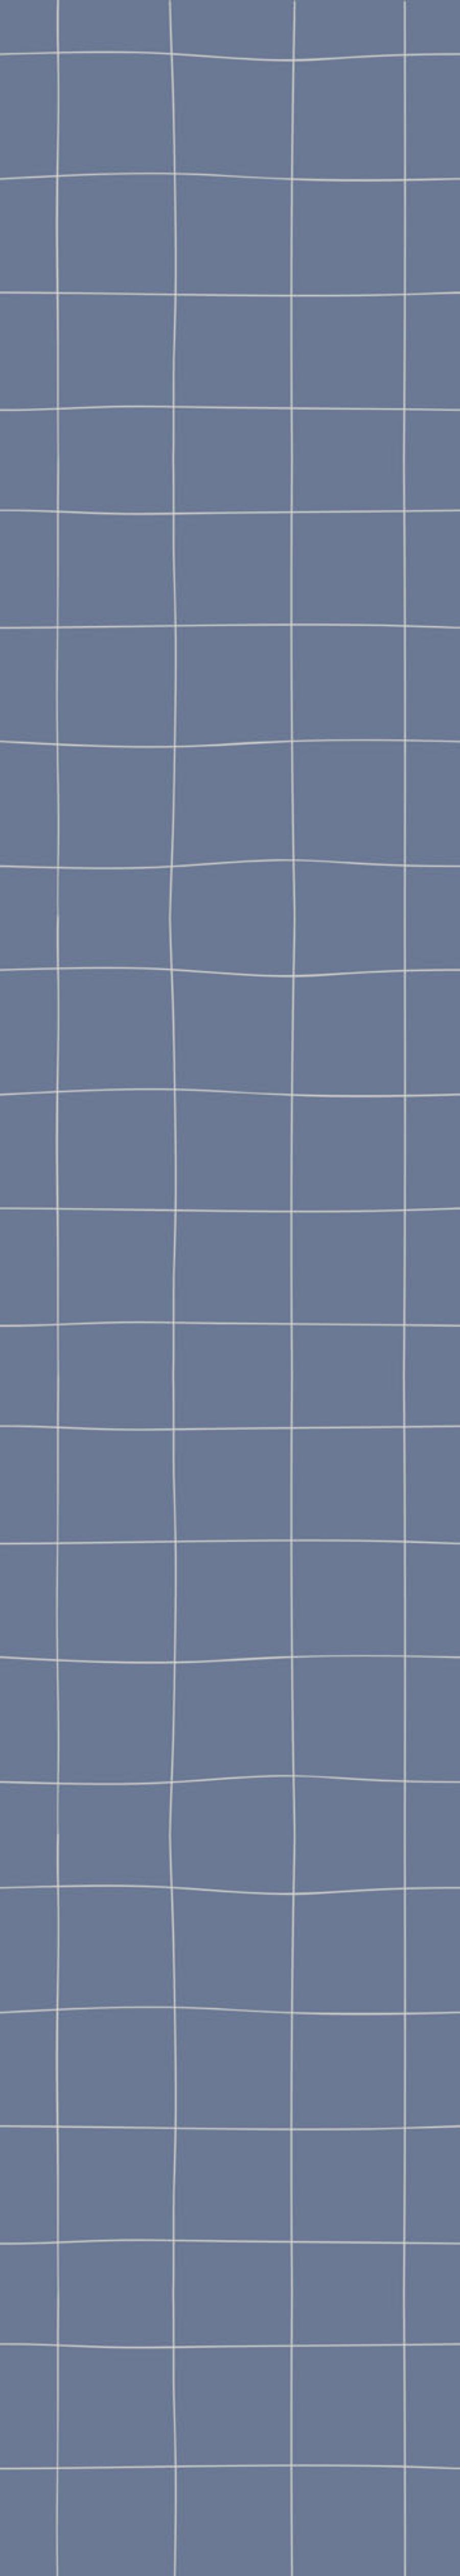 Irregular Check Pattern Blue Wallpaper 50x280CM